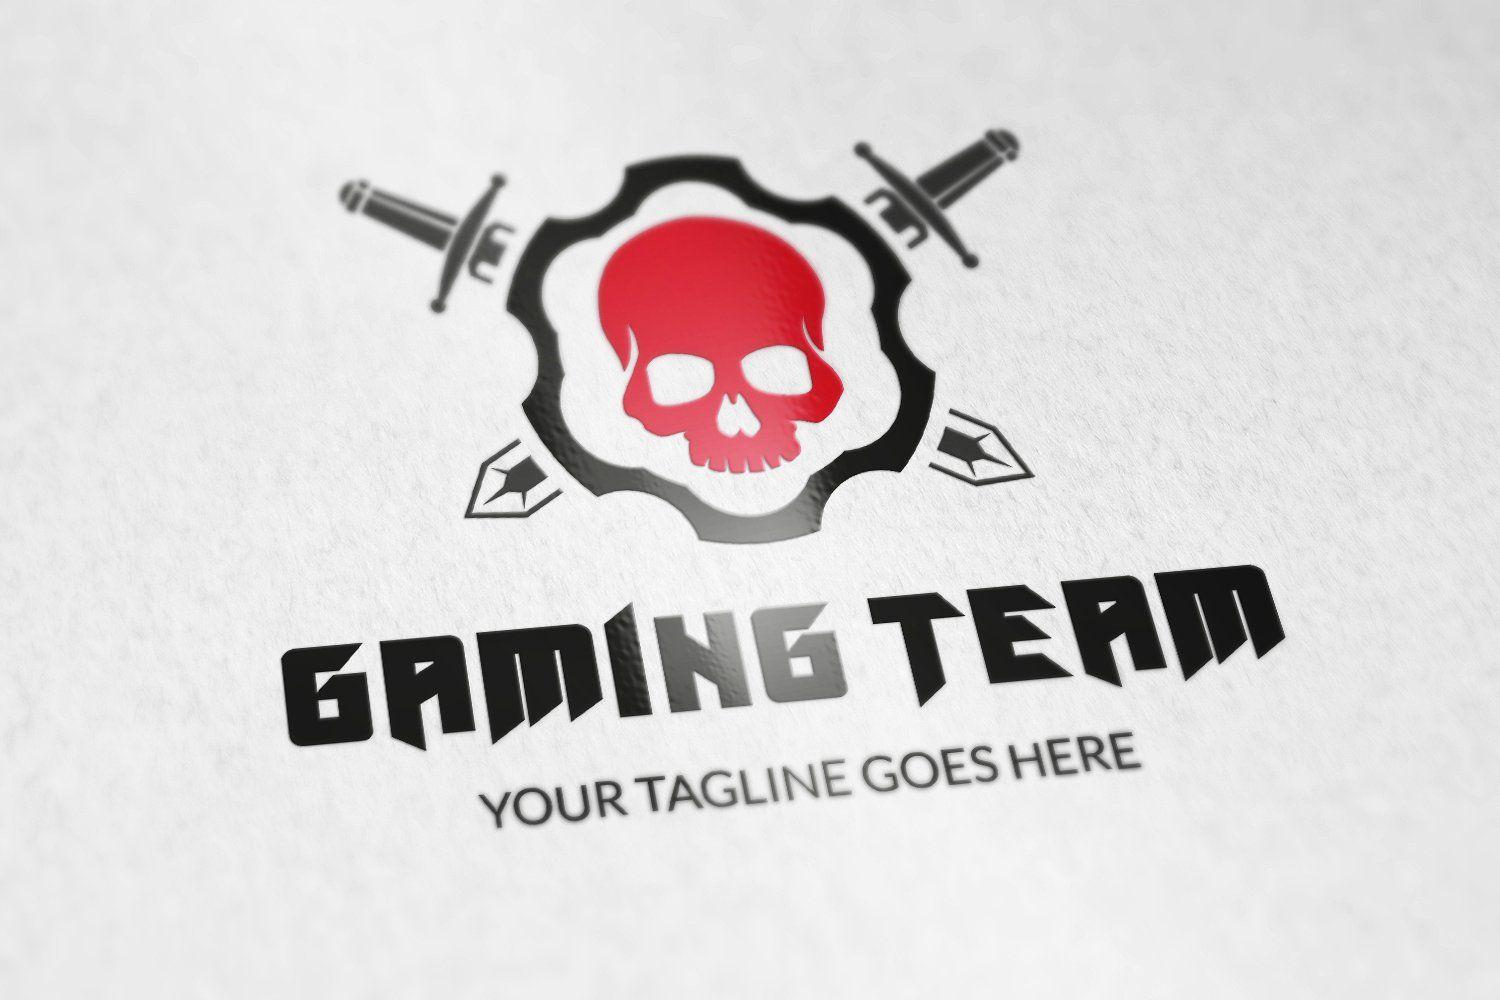 Creative Gaming Logo - Gaming Team logo v1 Logo Templates Creative Market